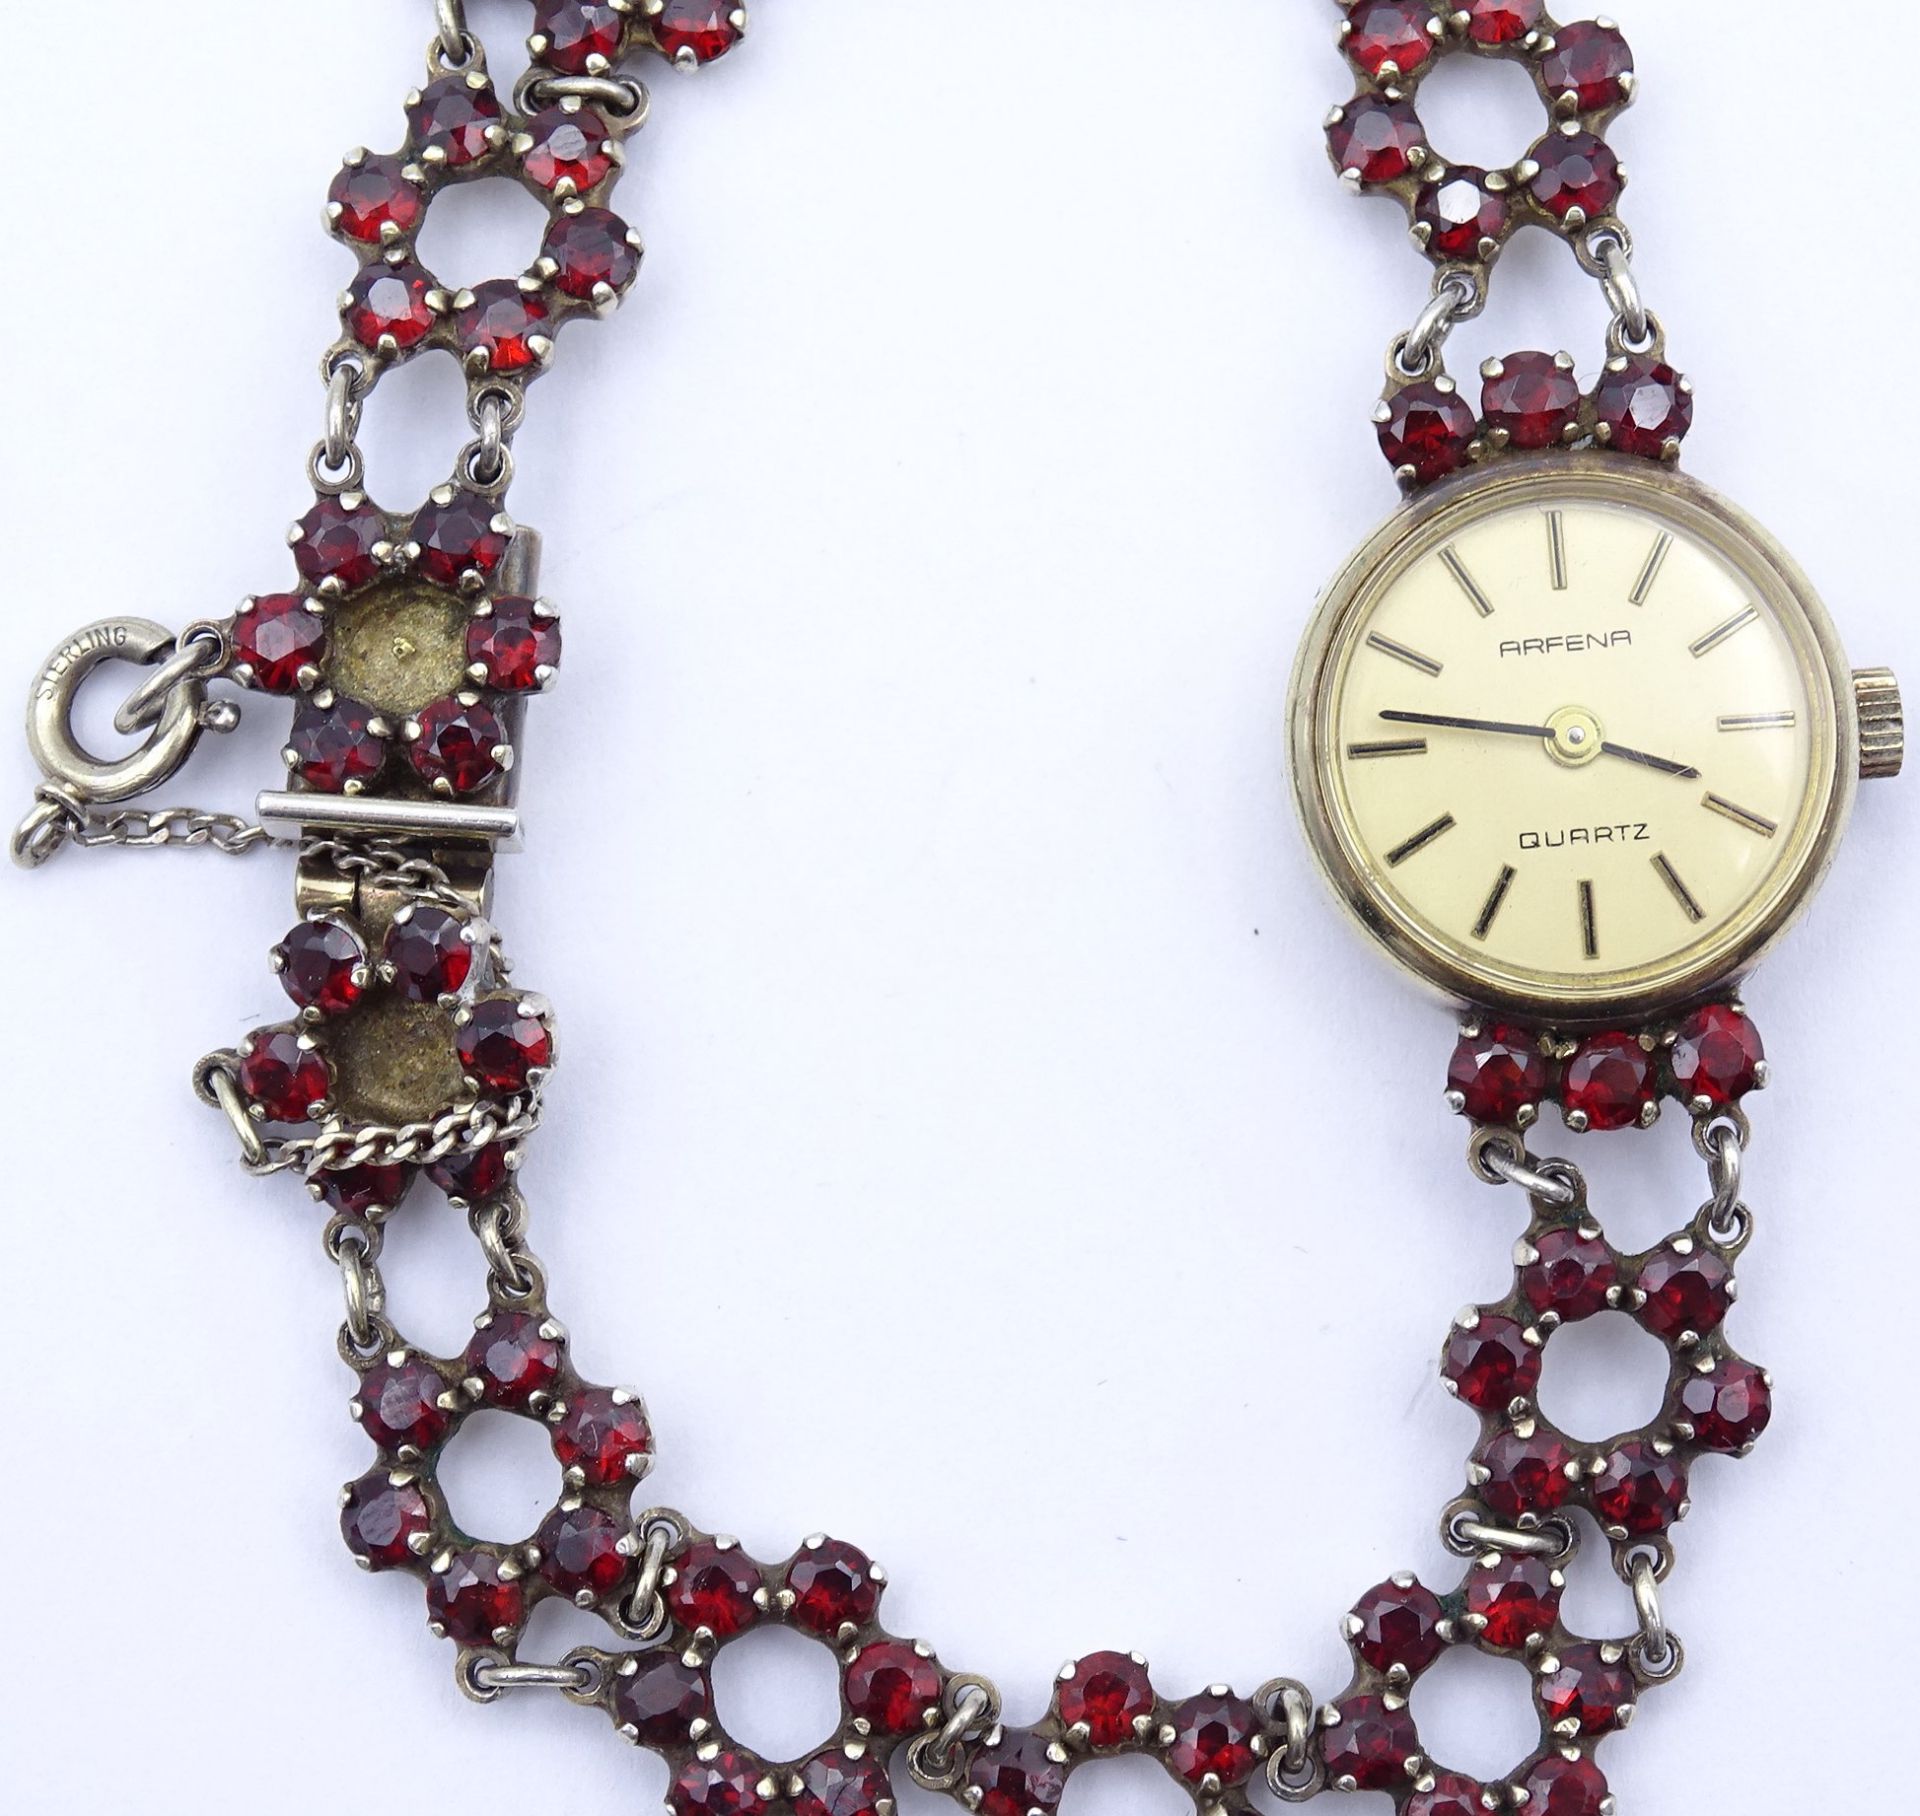 Damen Armbanduhr Arfena, Granat besatz, Vollsilber 0.925- vergoldet, Quartzwerk, D. 18mm, 18,6g. - Bild 2 aus 3